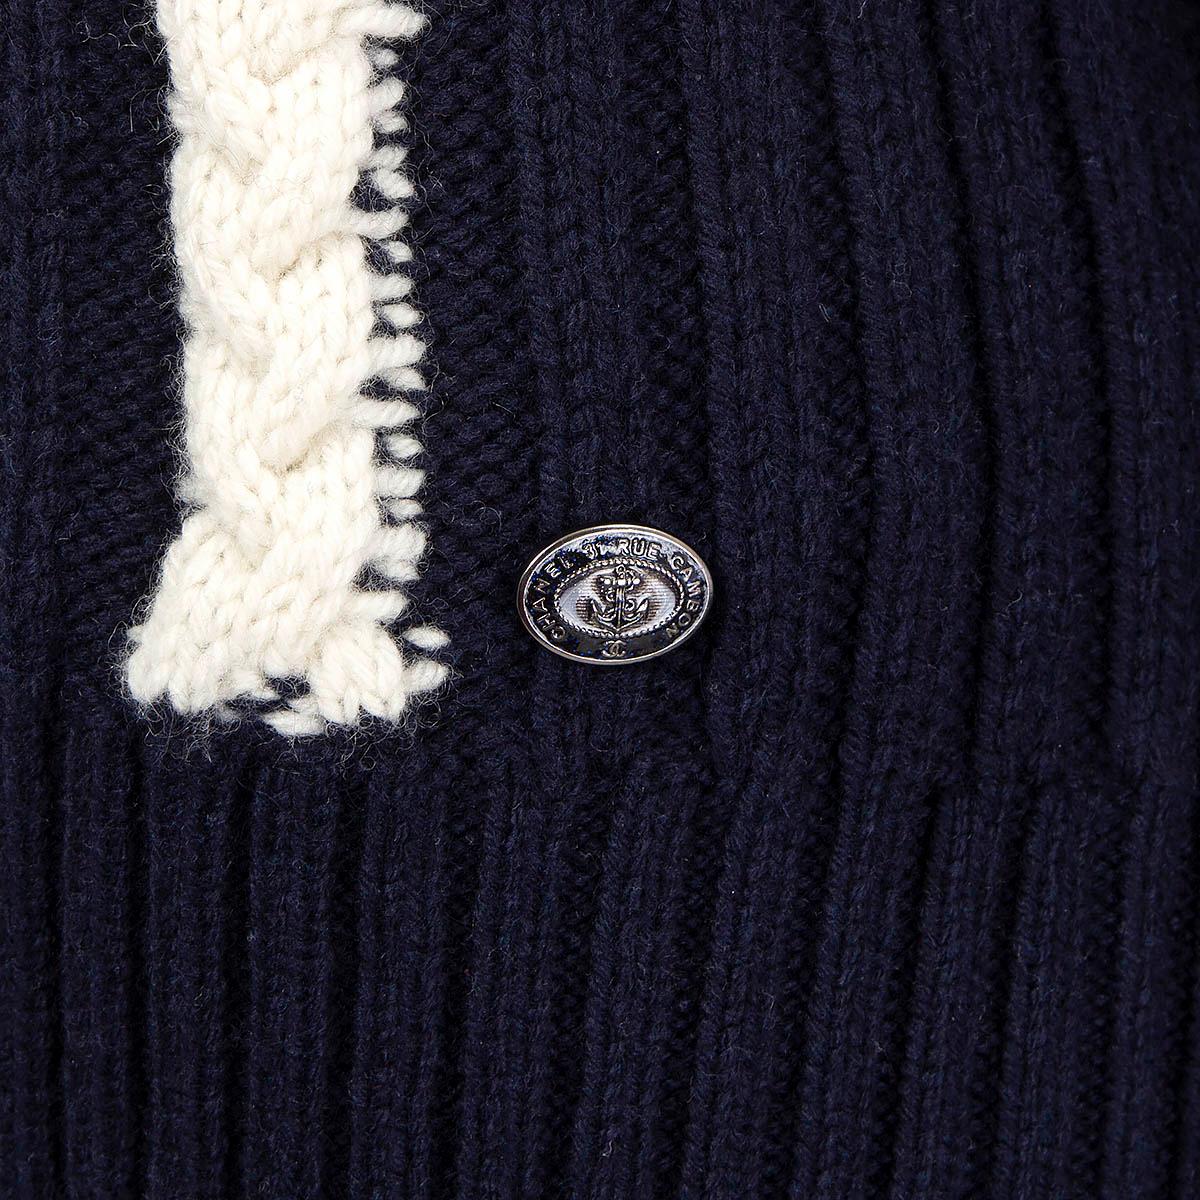 CHANEL navy blue & white wool blend 2018 18A HAMBURG CHUNKY KNIT Sweater 38 S 5